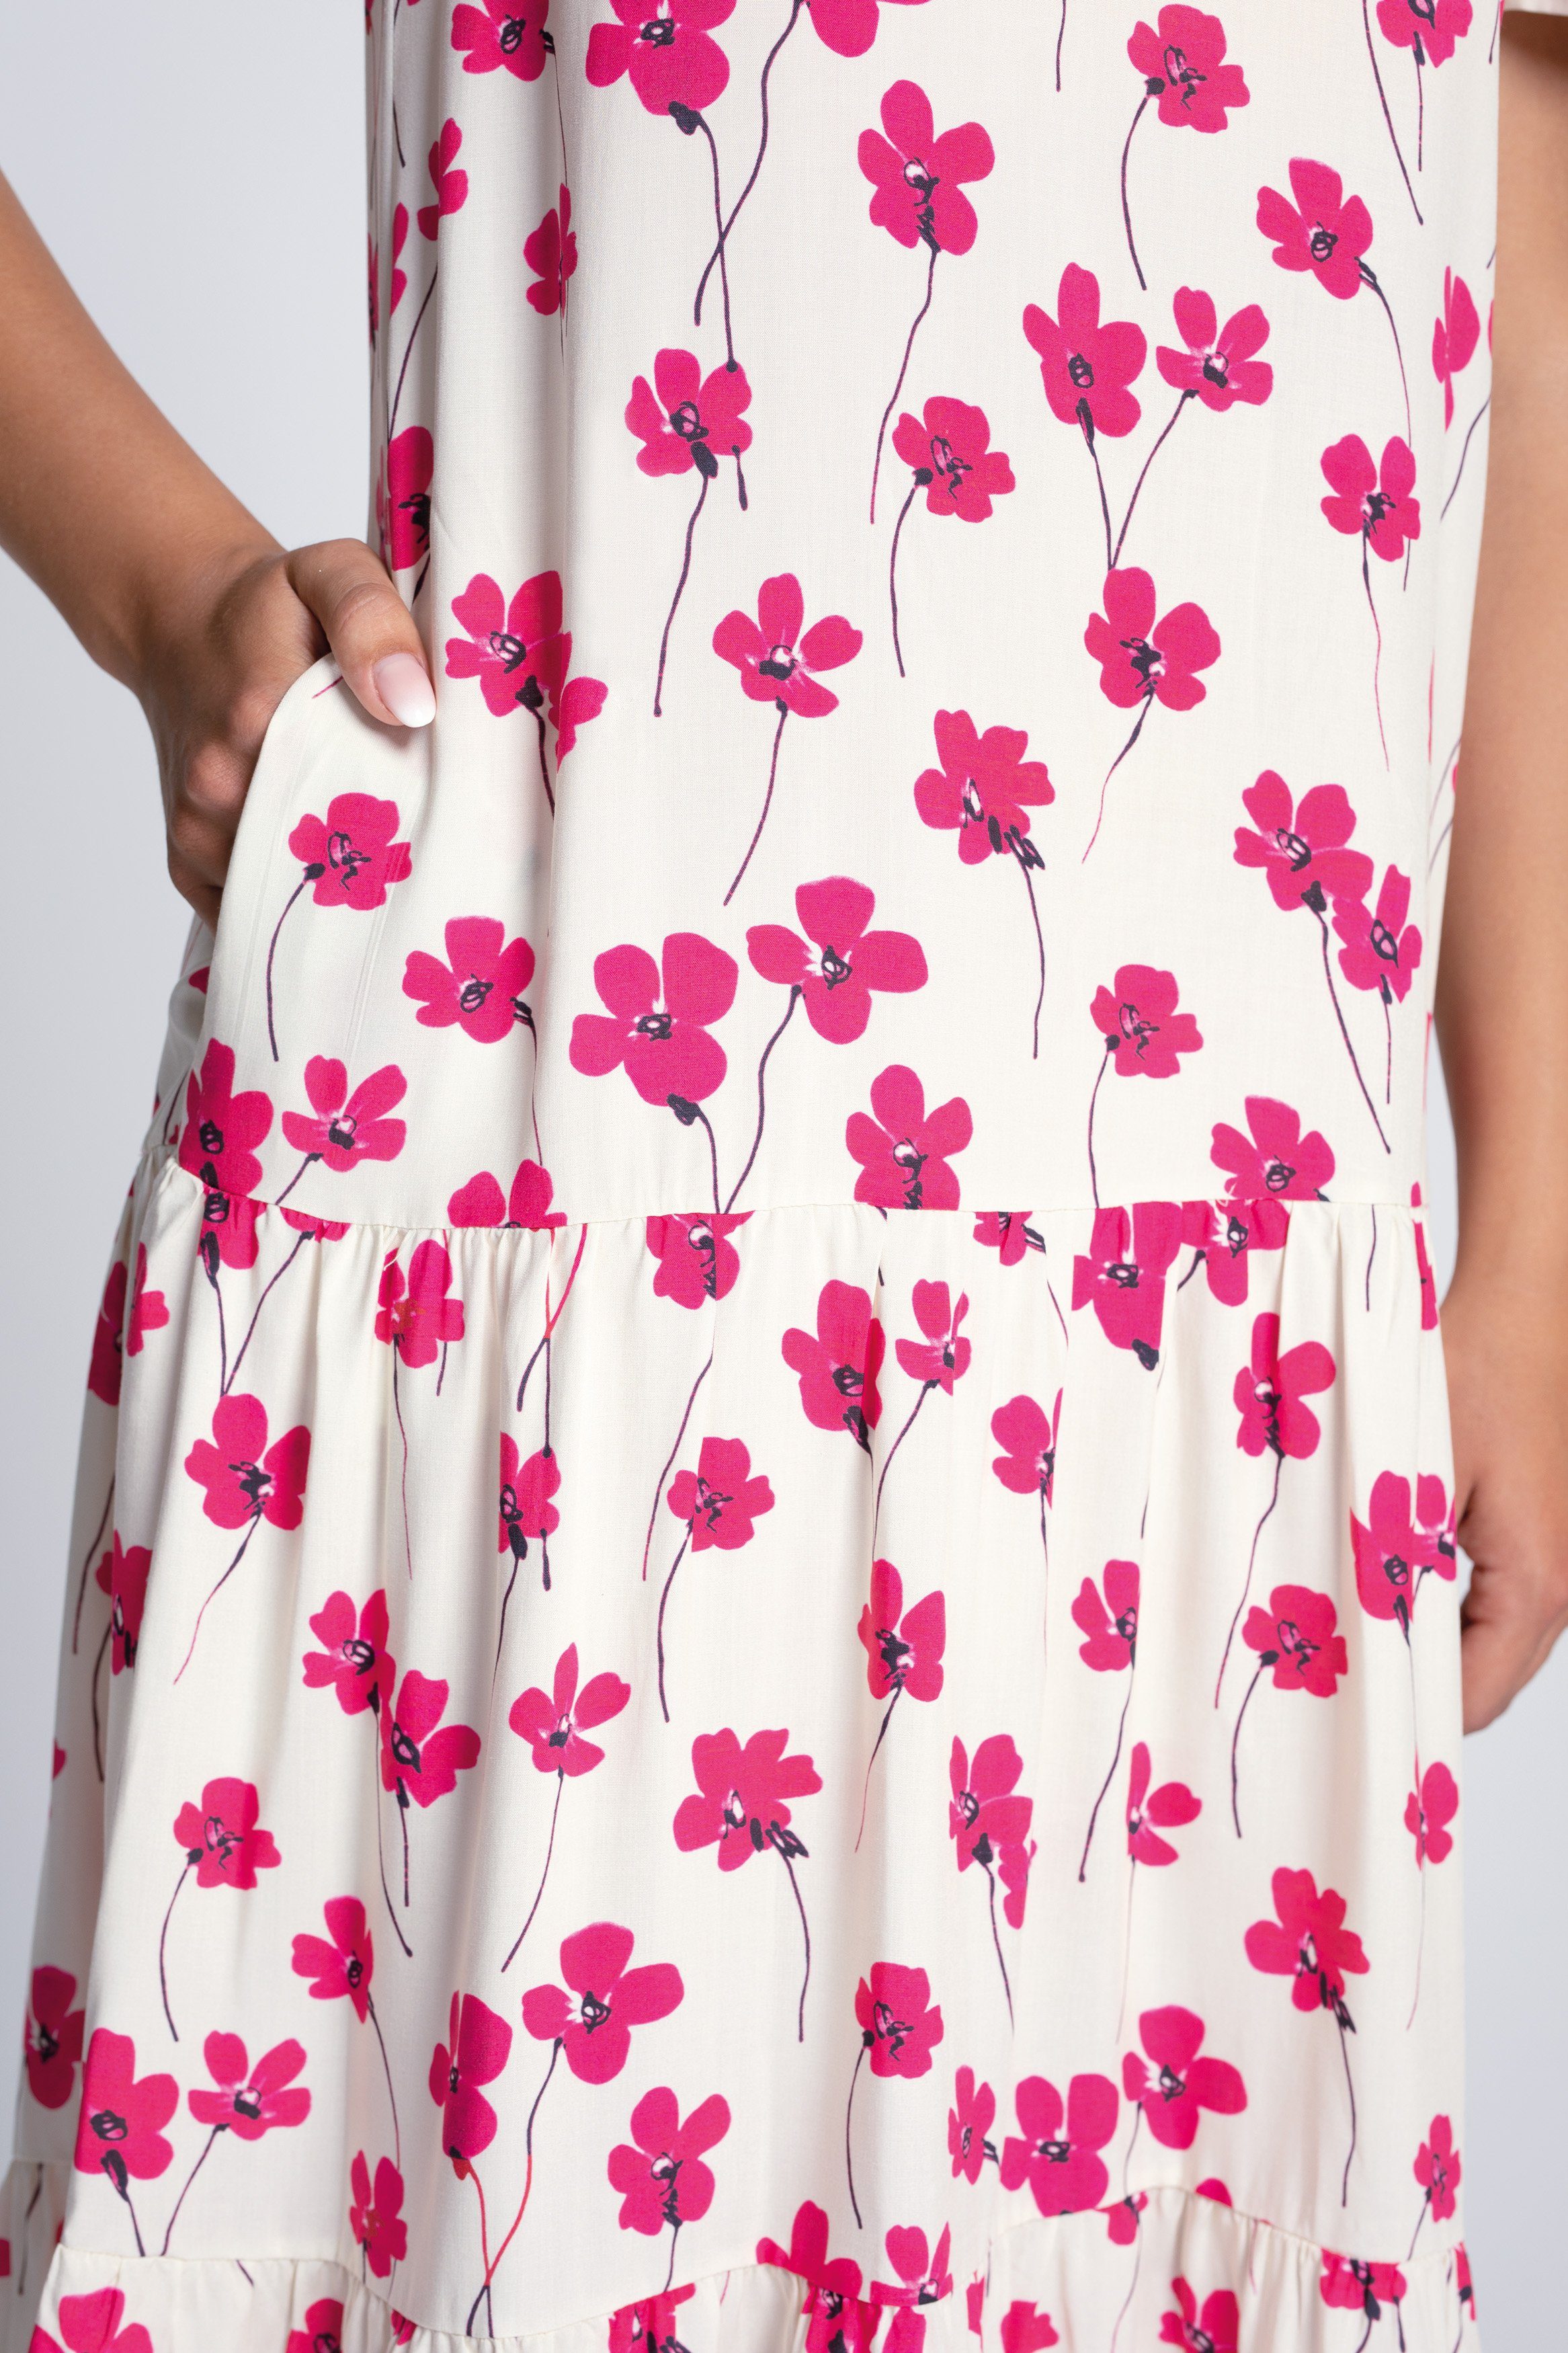 MODEE Sommerkleid femininer floraler, Blumendruck und Alloverprint Passform lockere